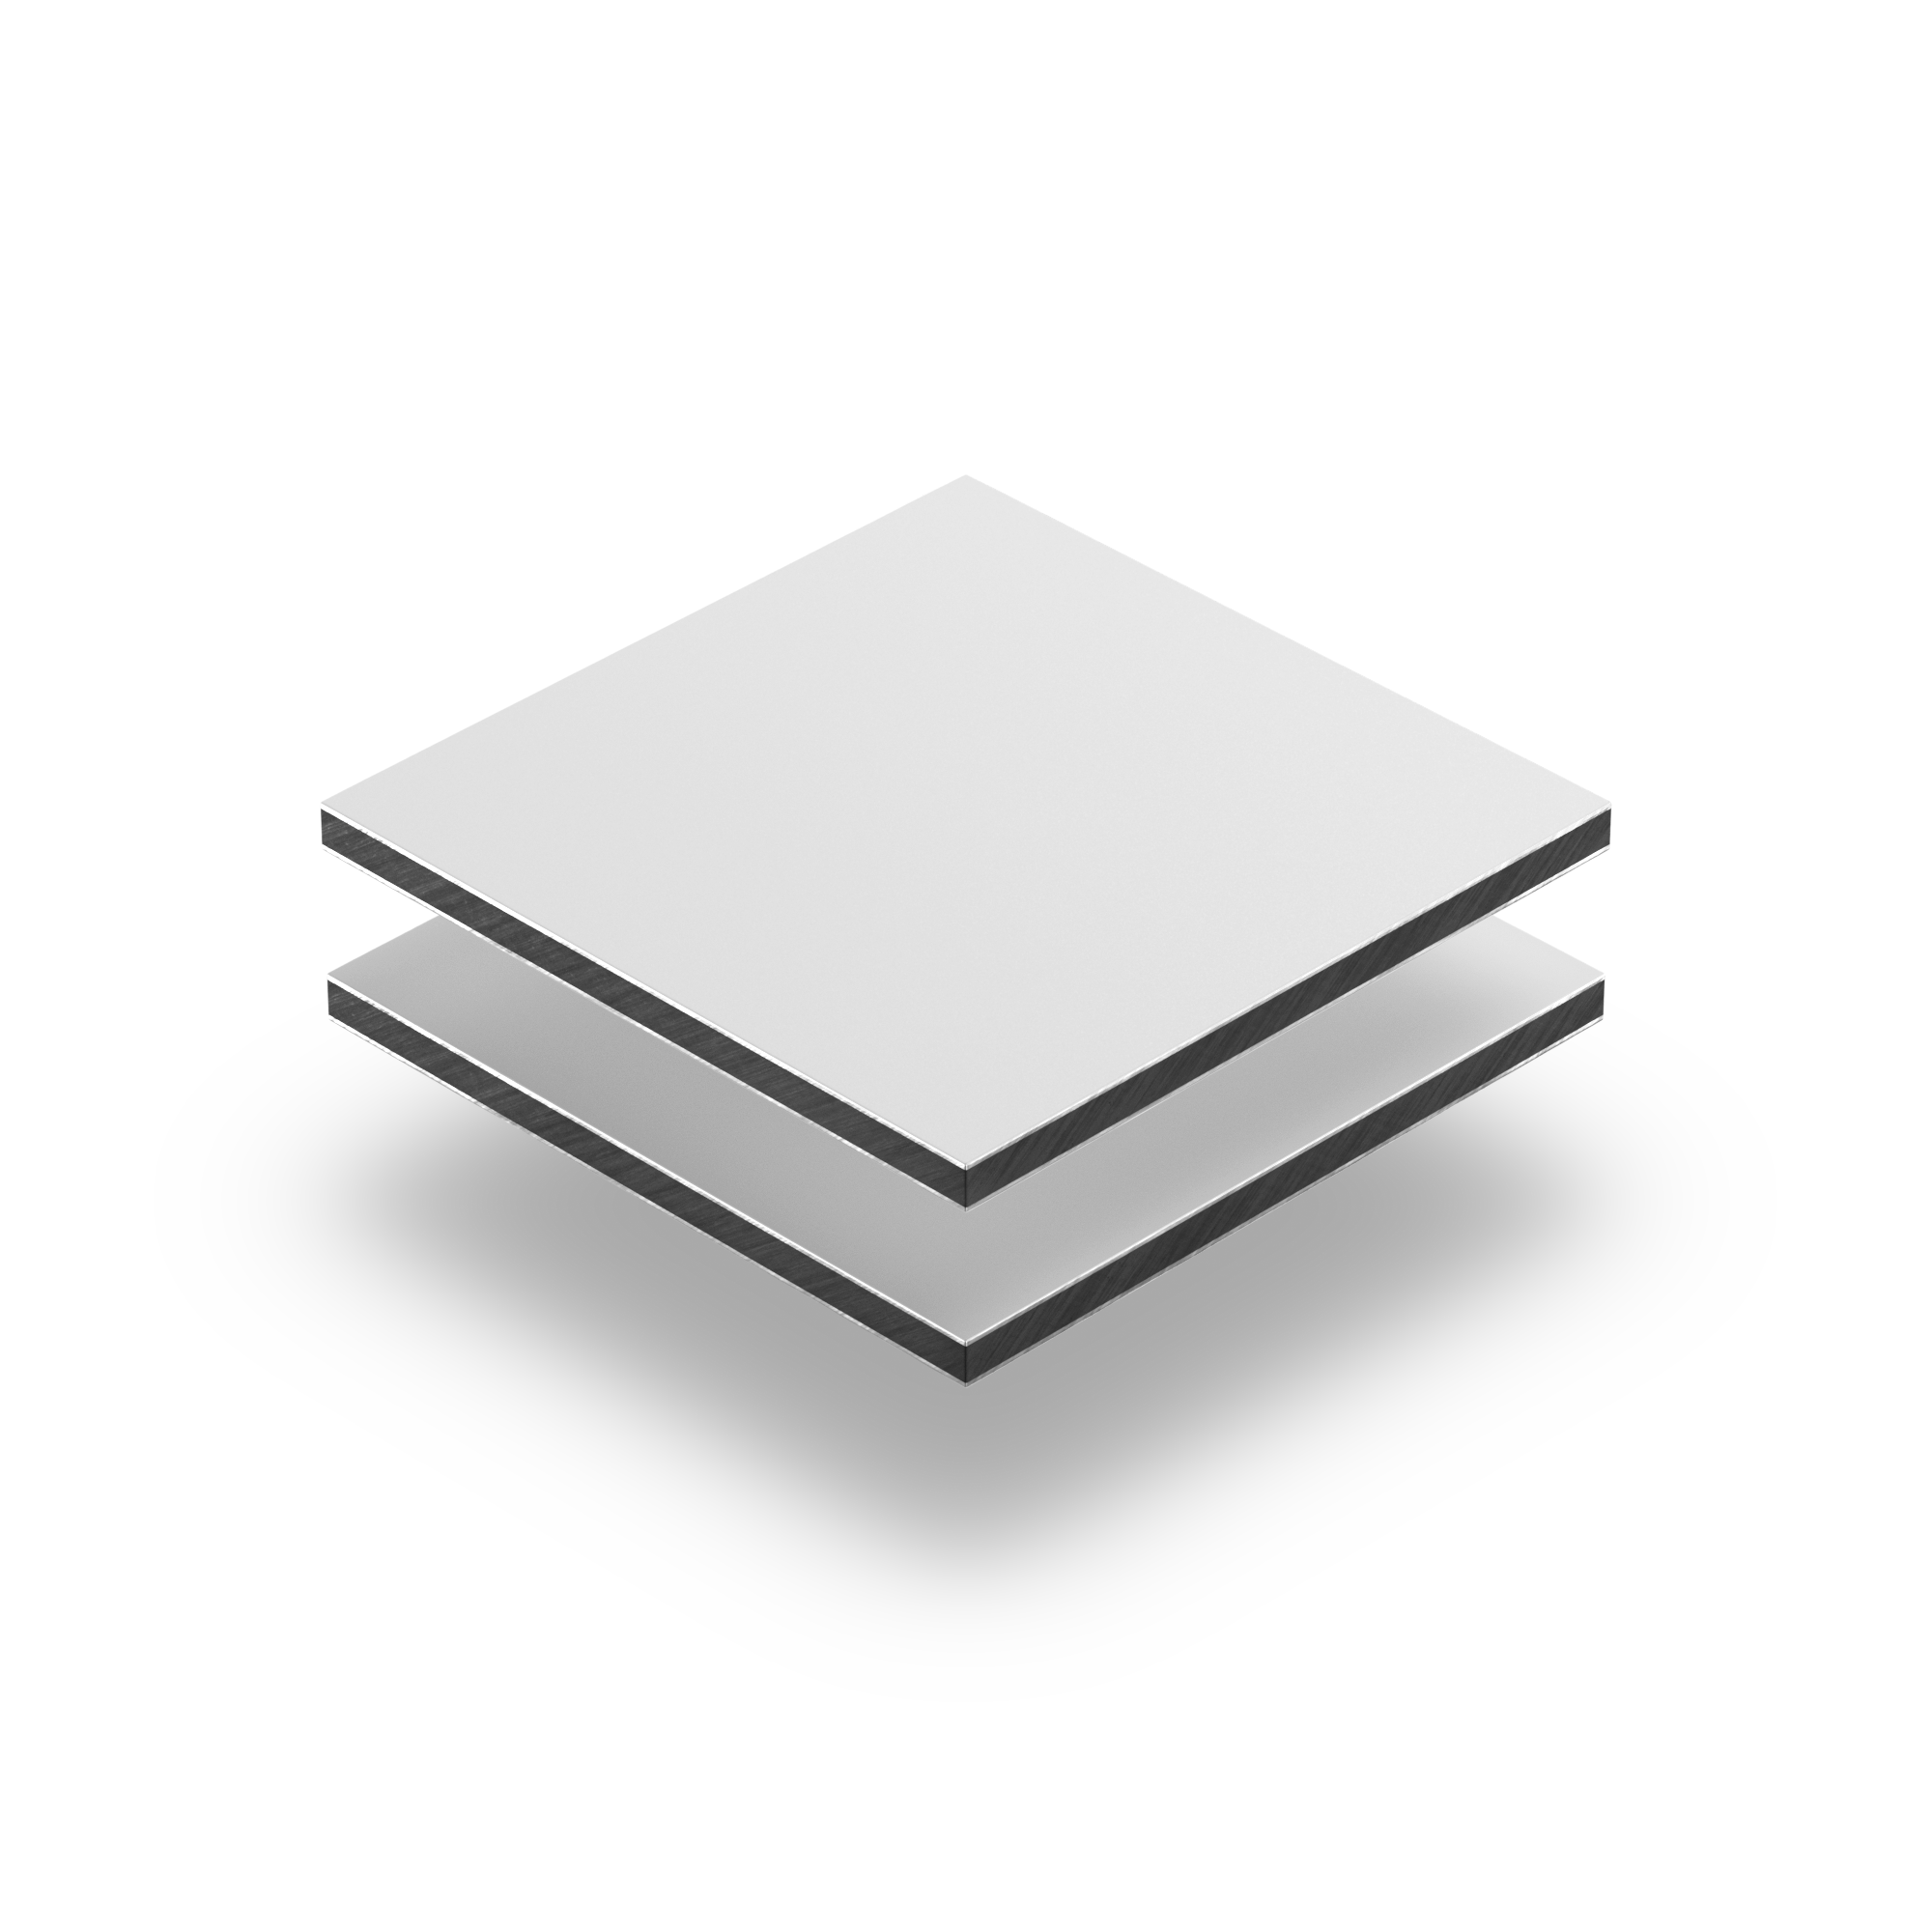 4x Aluverbundplatte DIN A4 Weiss 3mm/0,2 Aluminium Kunststoff Aluverbund Platte 